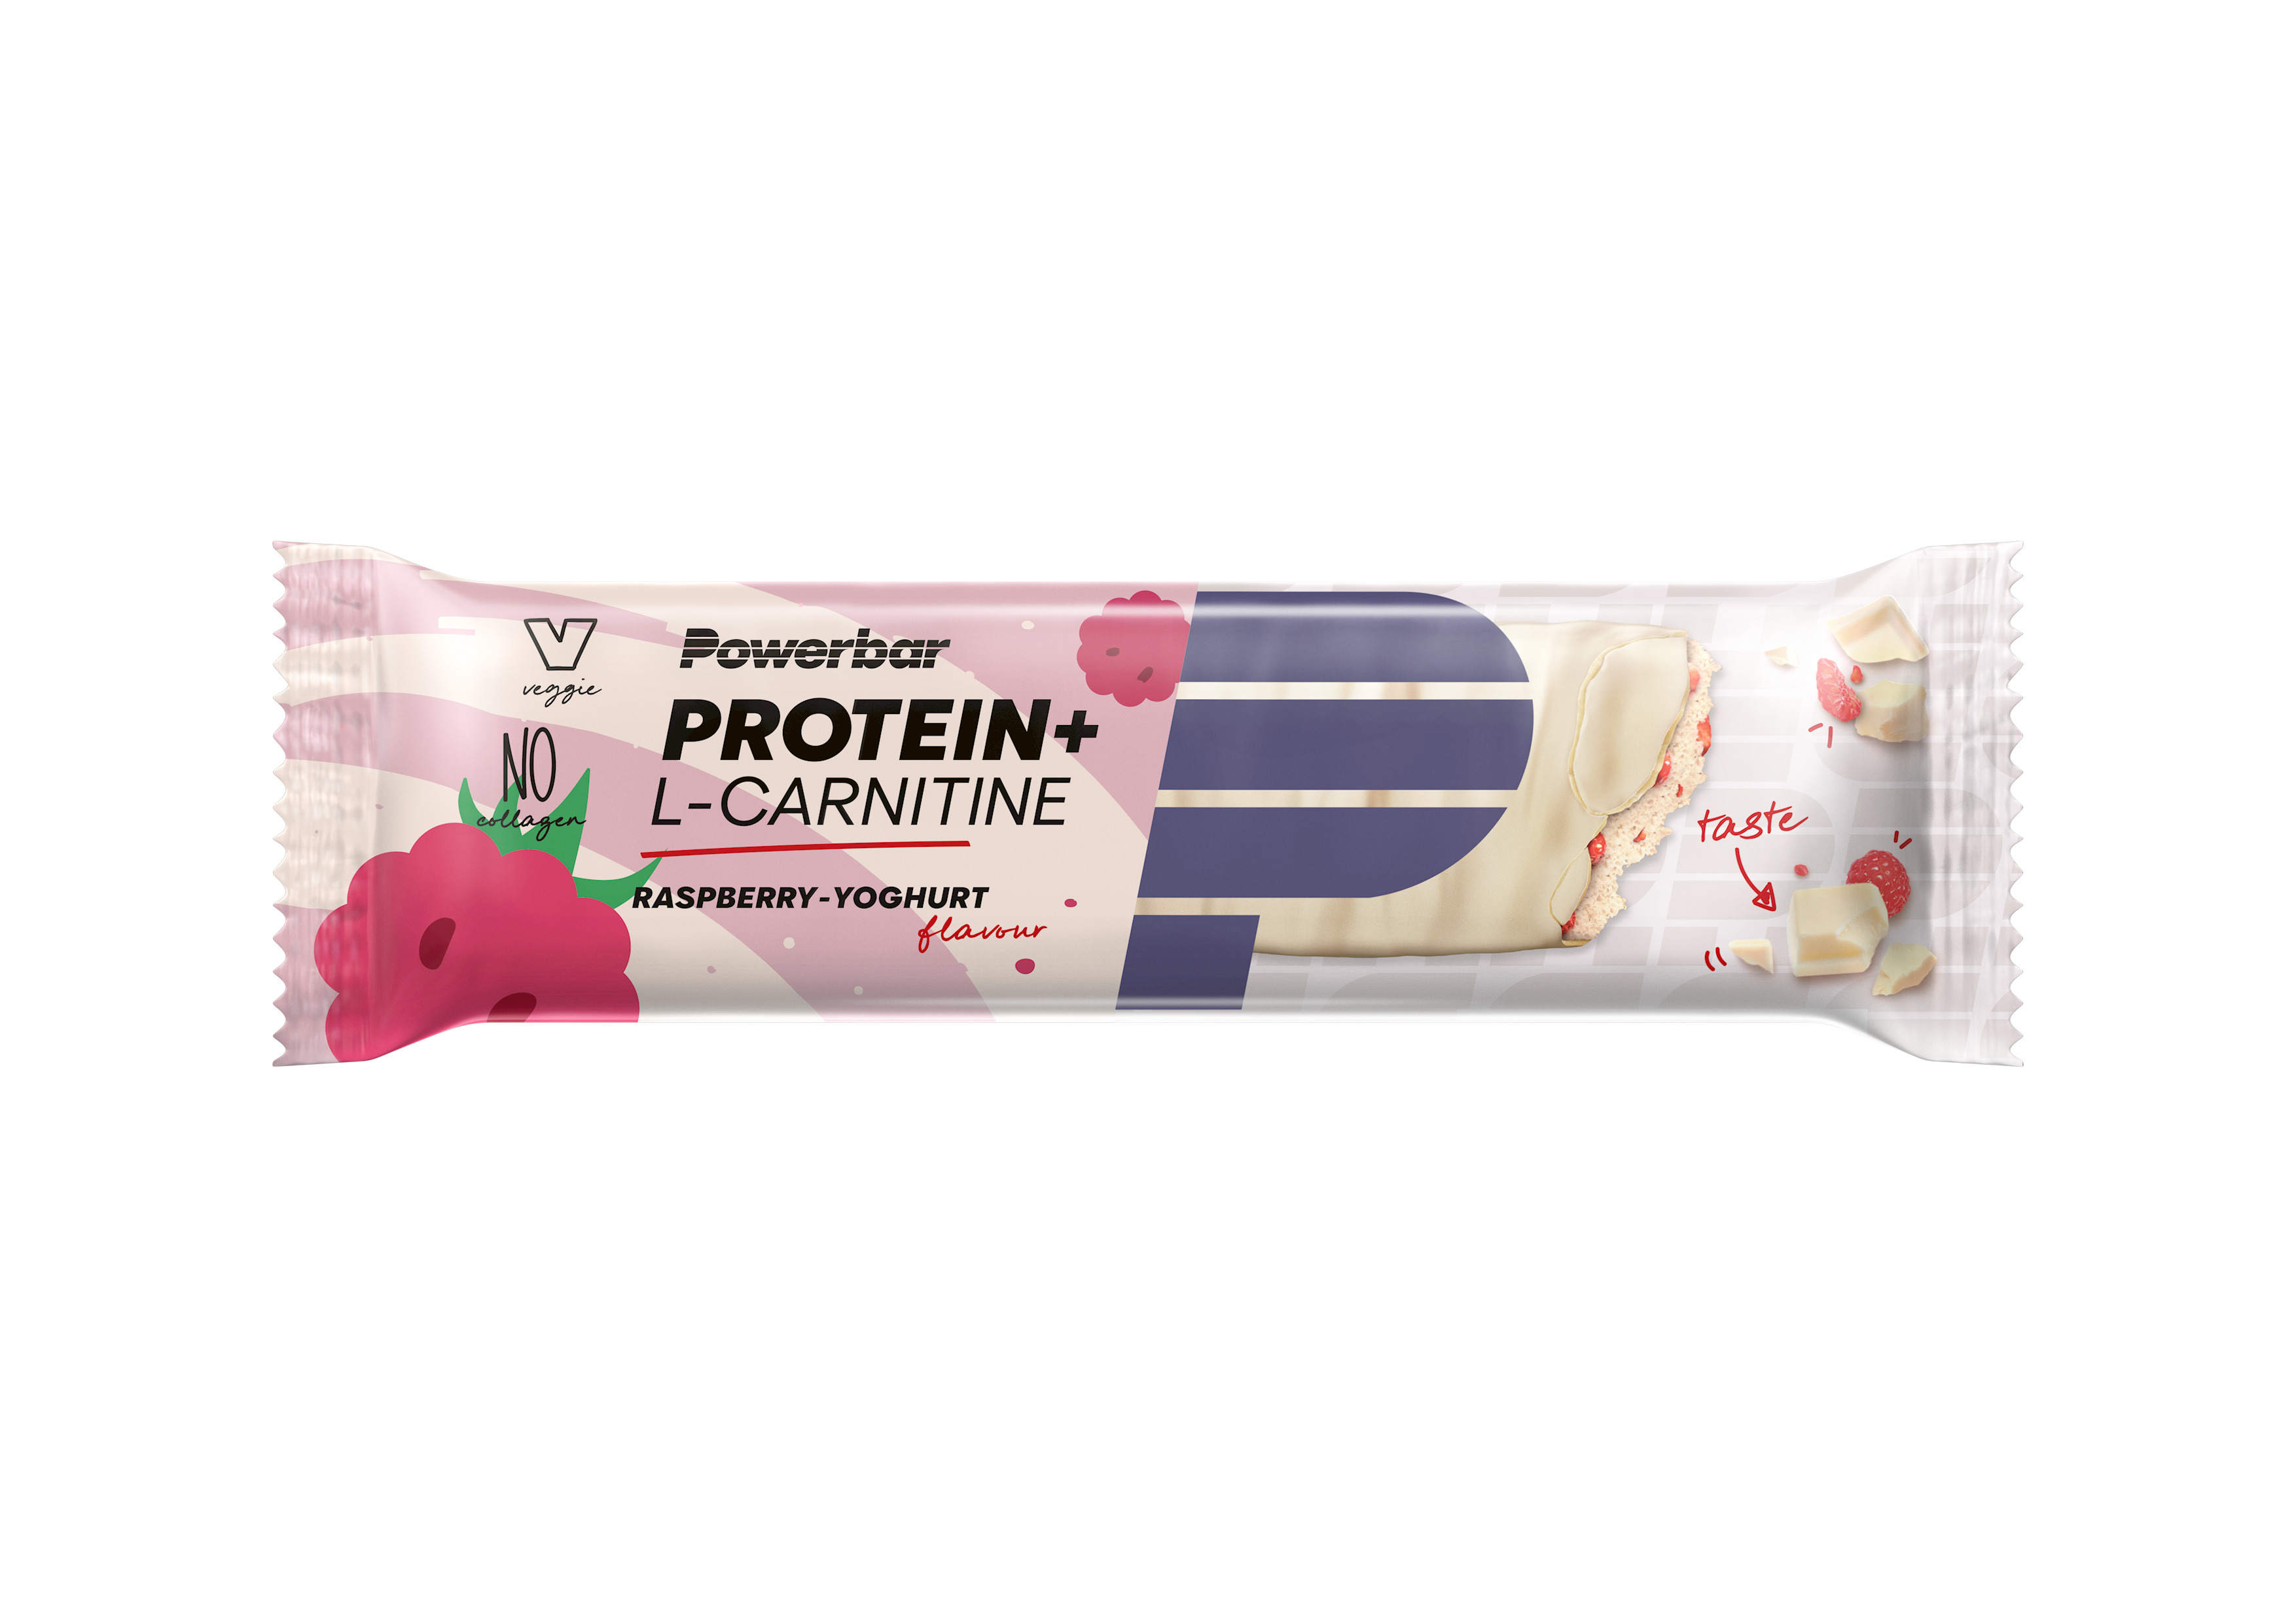 PowerBar ProteinPlus + L-Carnitine (35g)